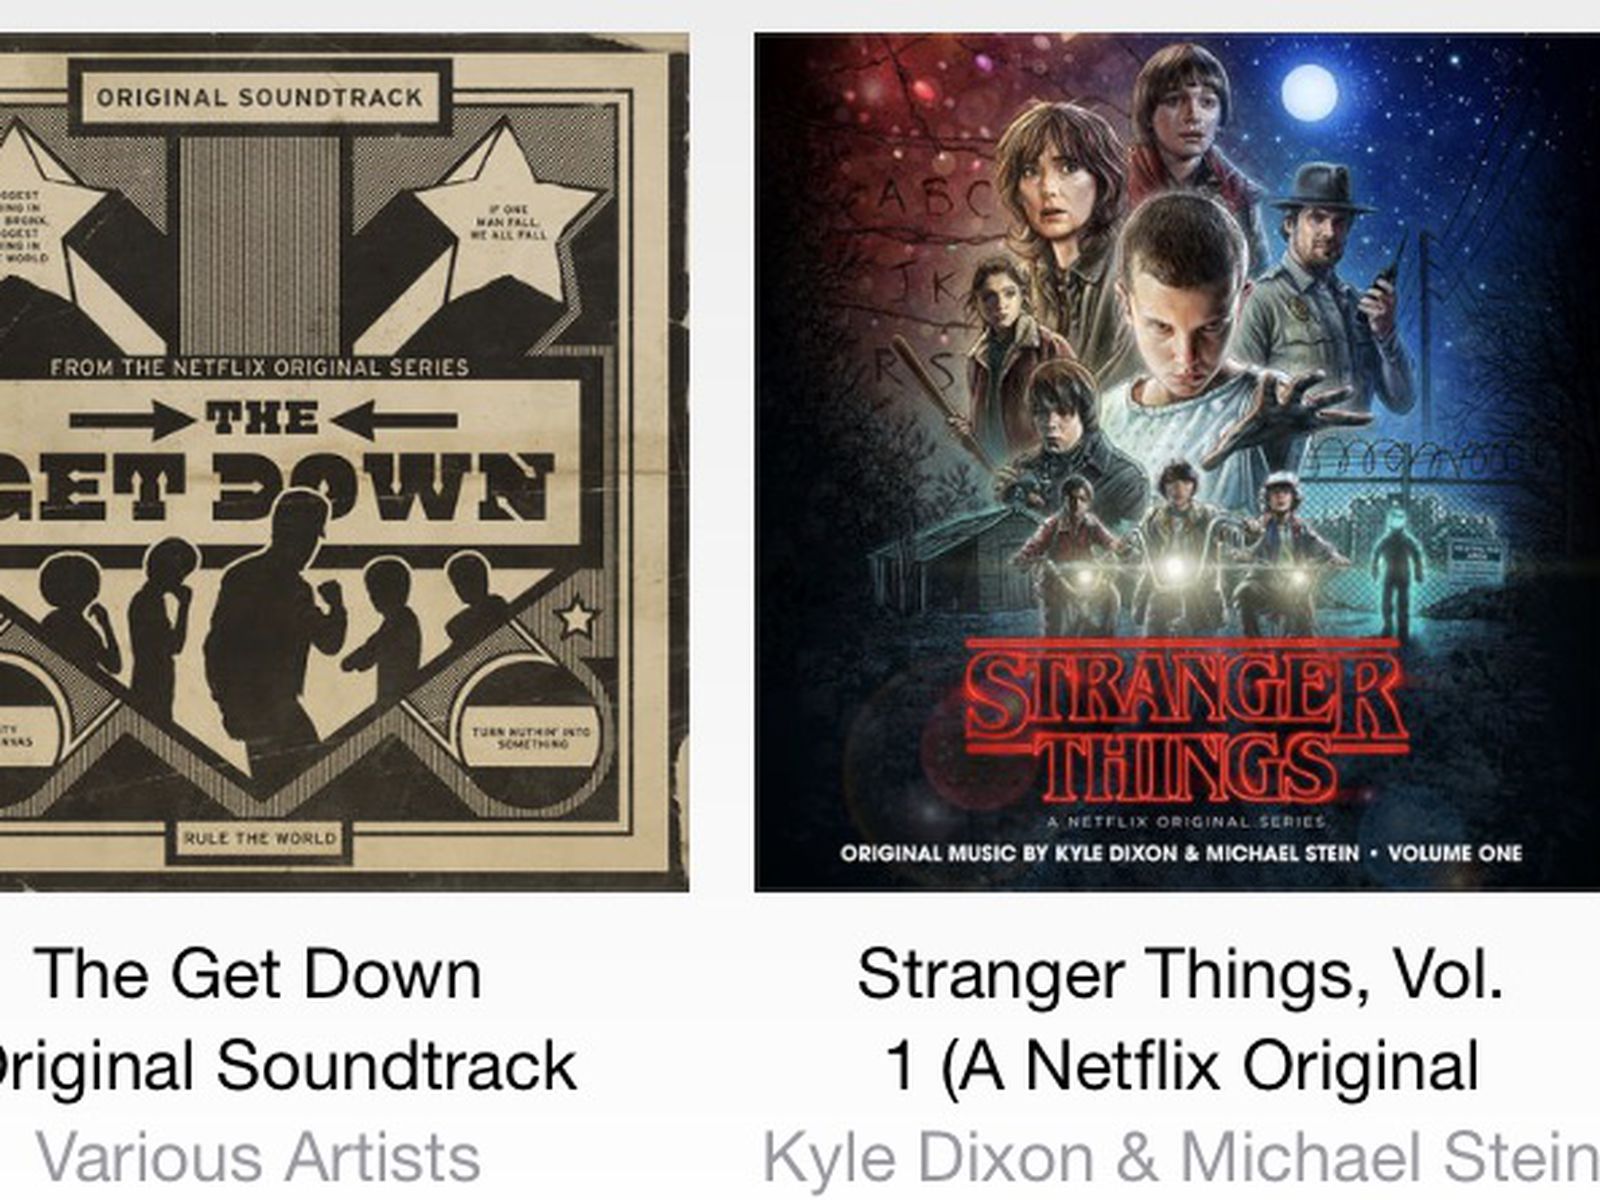 Stranger Things 3 (Original Score from the Netflix Original Series) - Album  by Kyle Dixon & Michael Stein